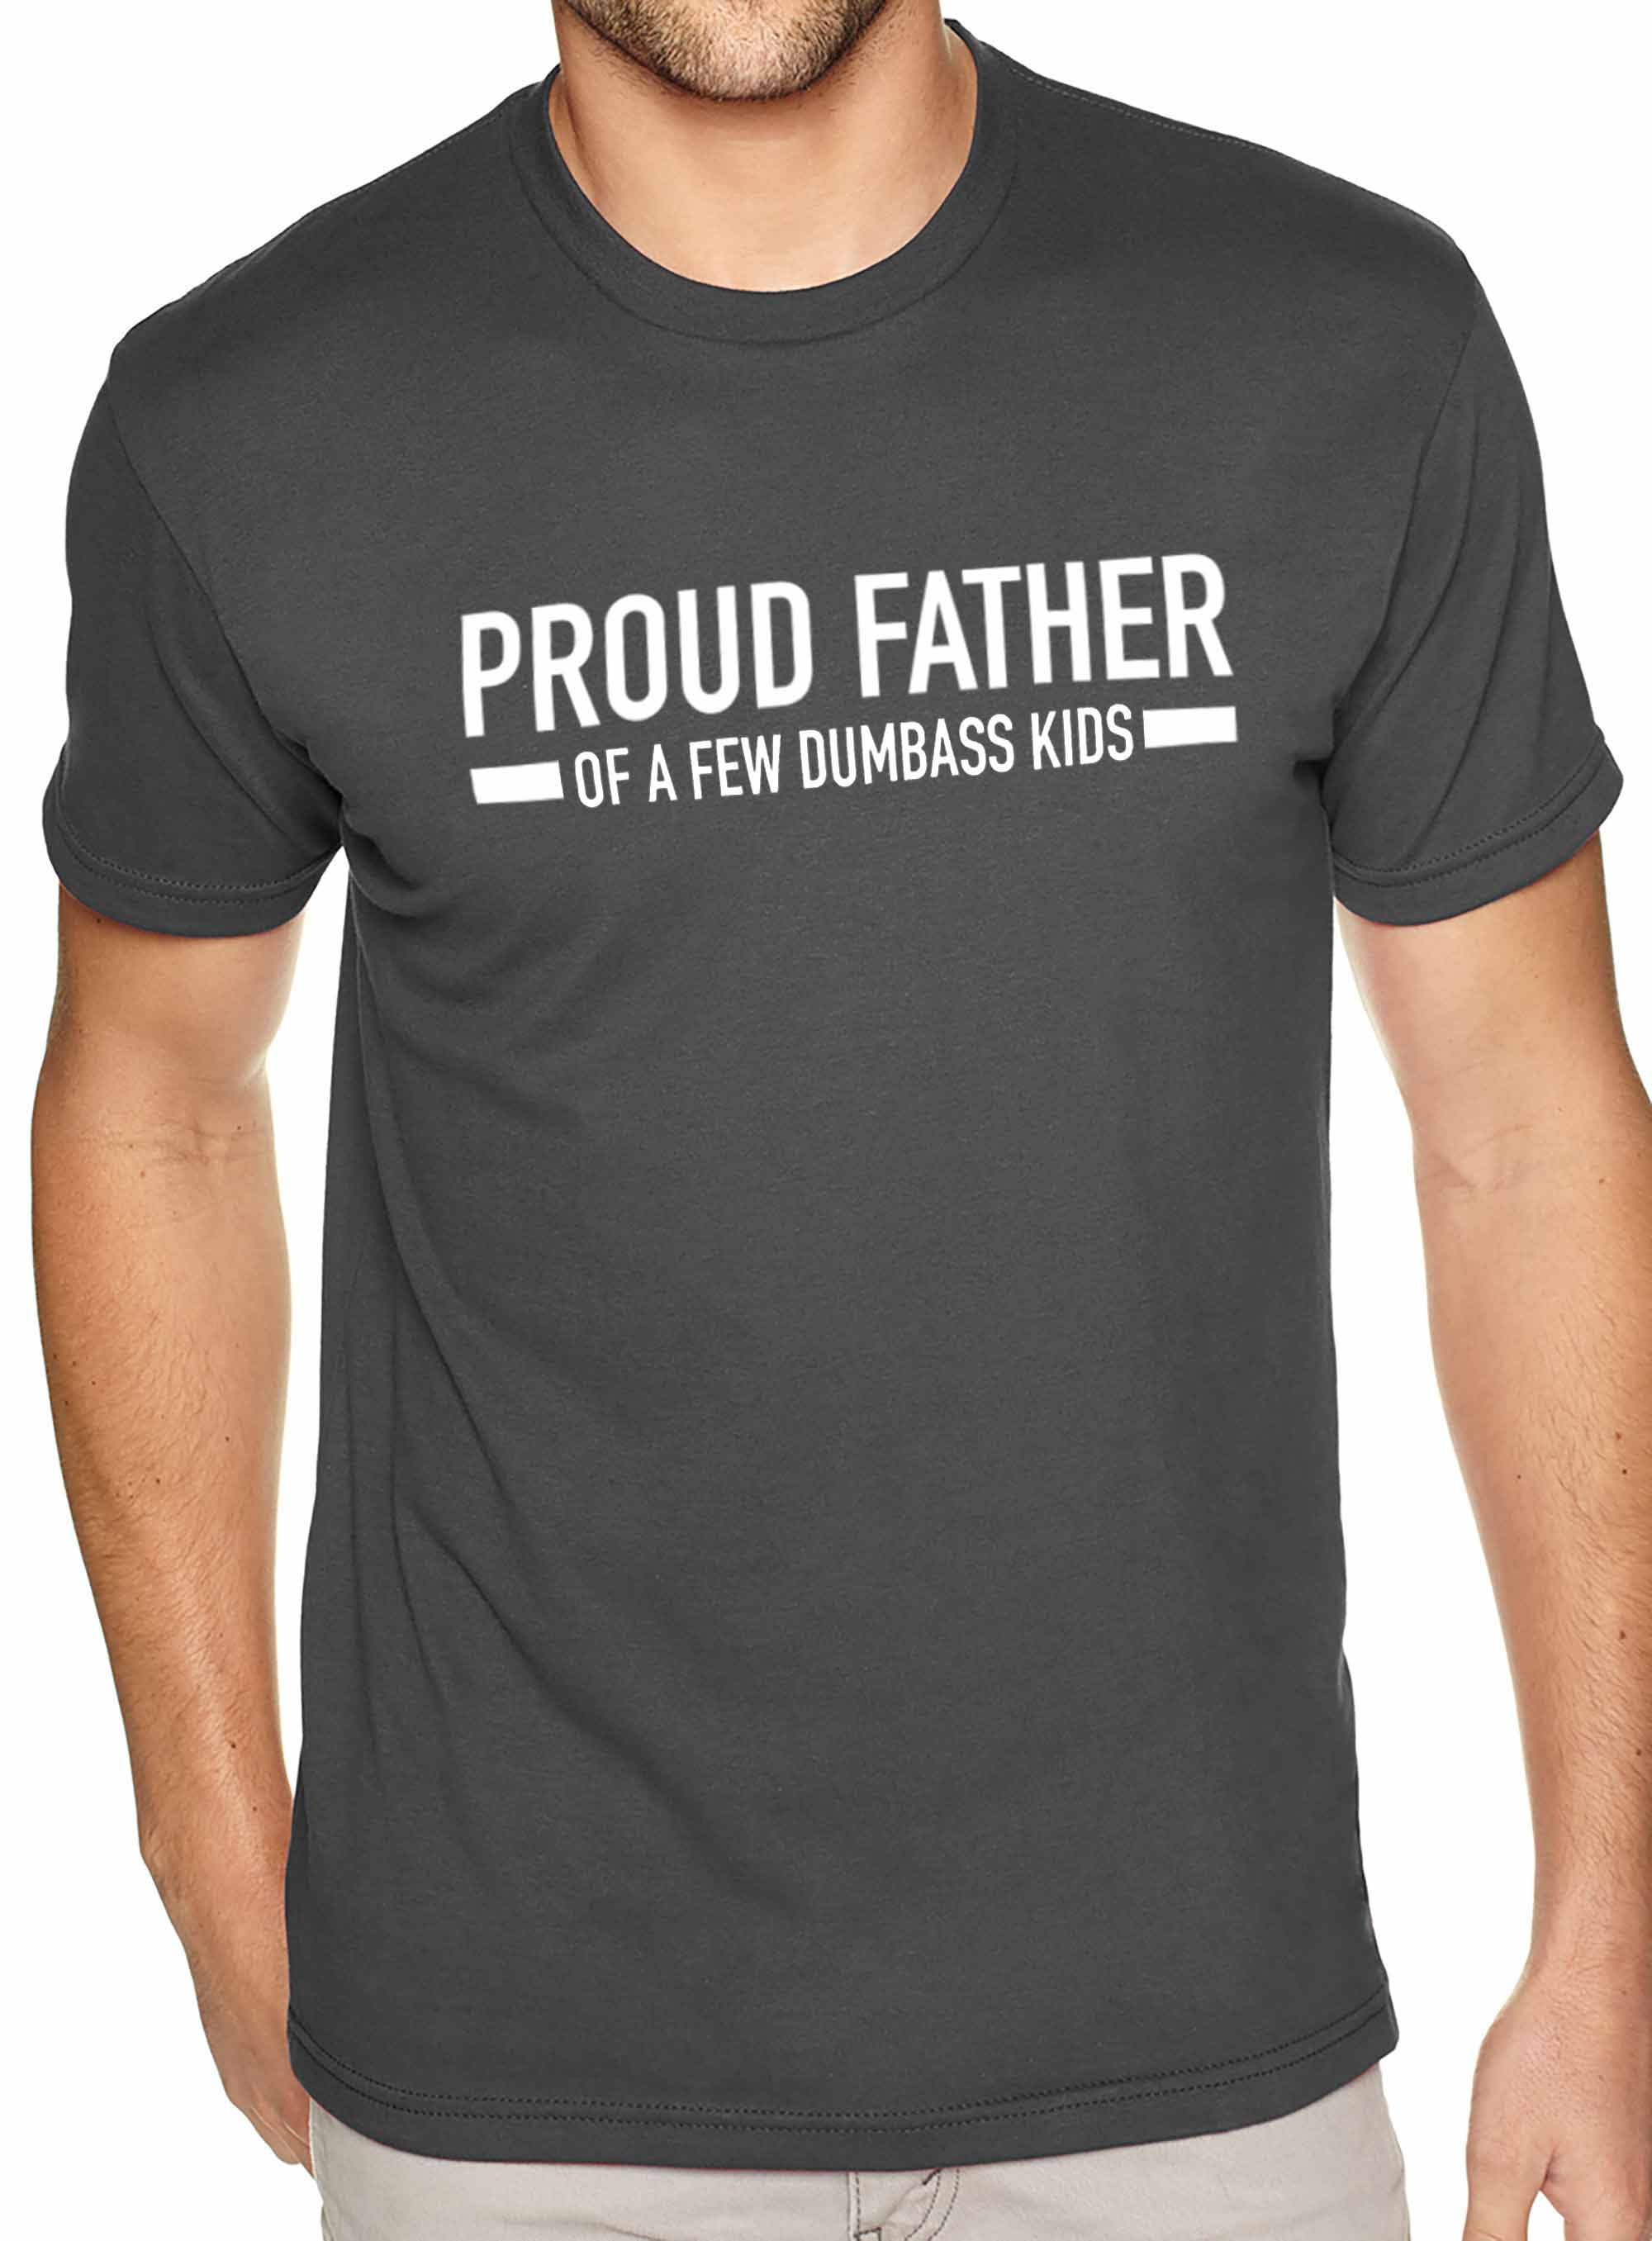 Funny Shirt Men | Proud Father of a Few Dumbass Kids | T Shirt for Men ...